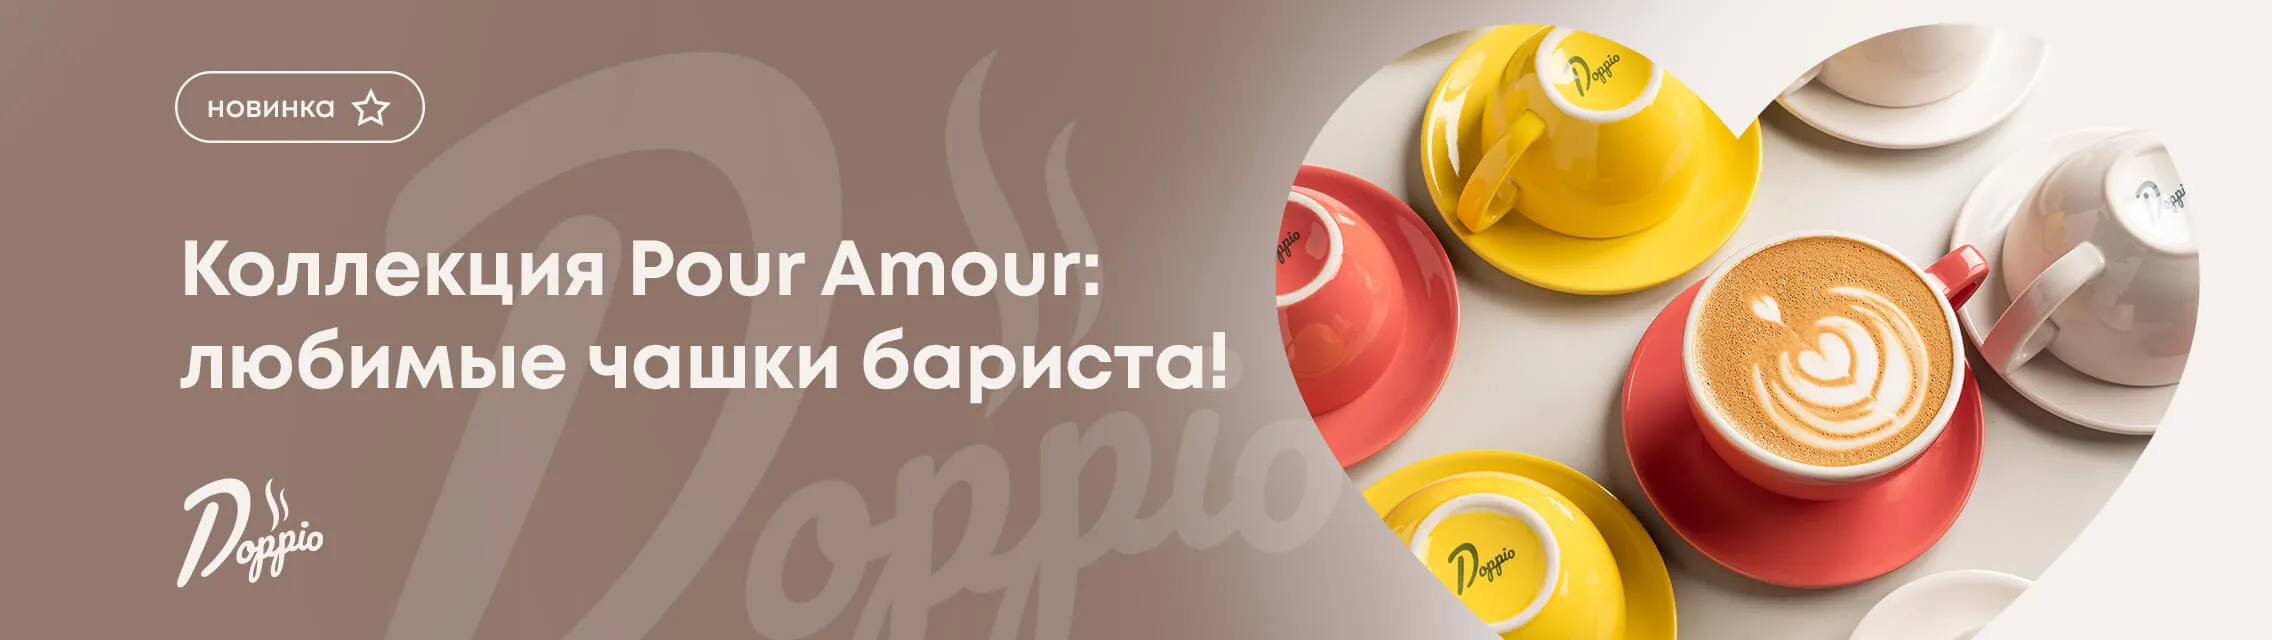 Коллекция Pour Amour: любимые чашки бариста!